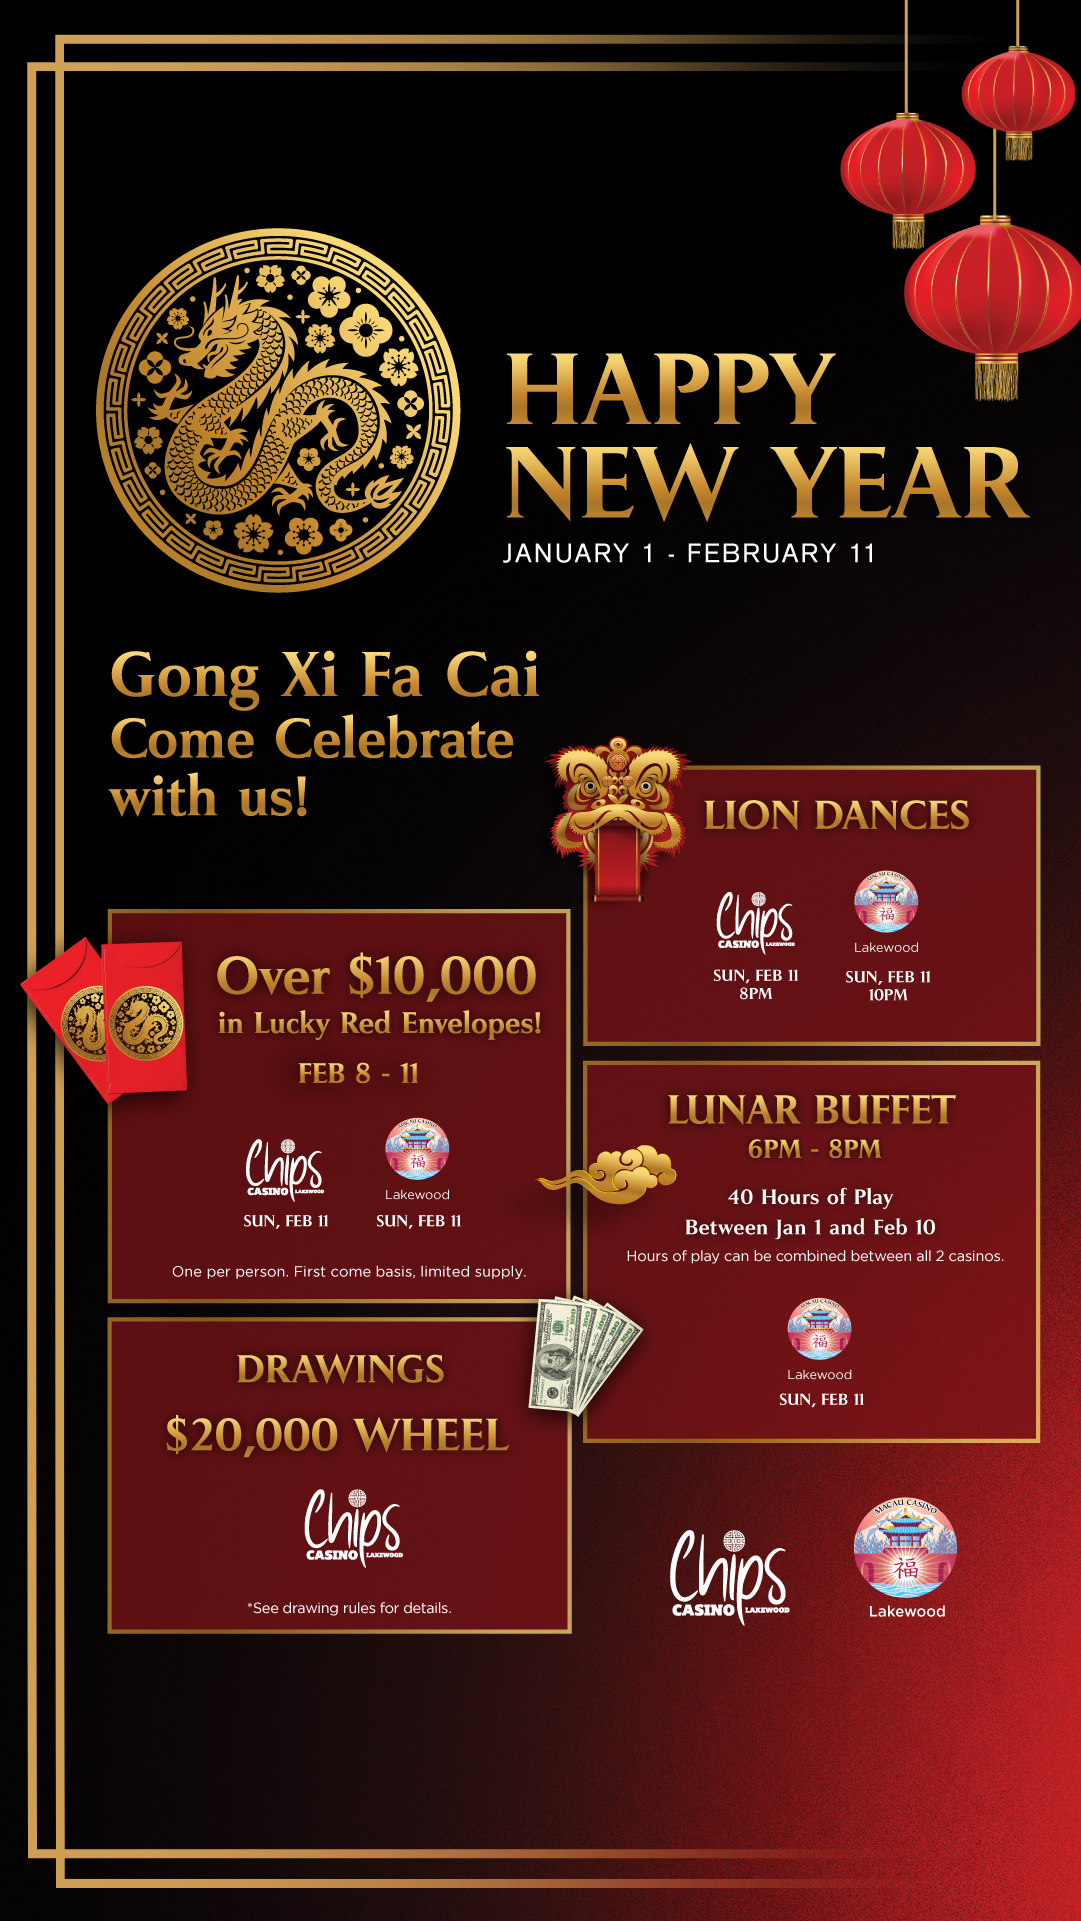 Lunar New Year | Washington Chips & Macau Lakewood